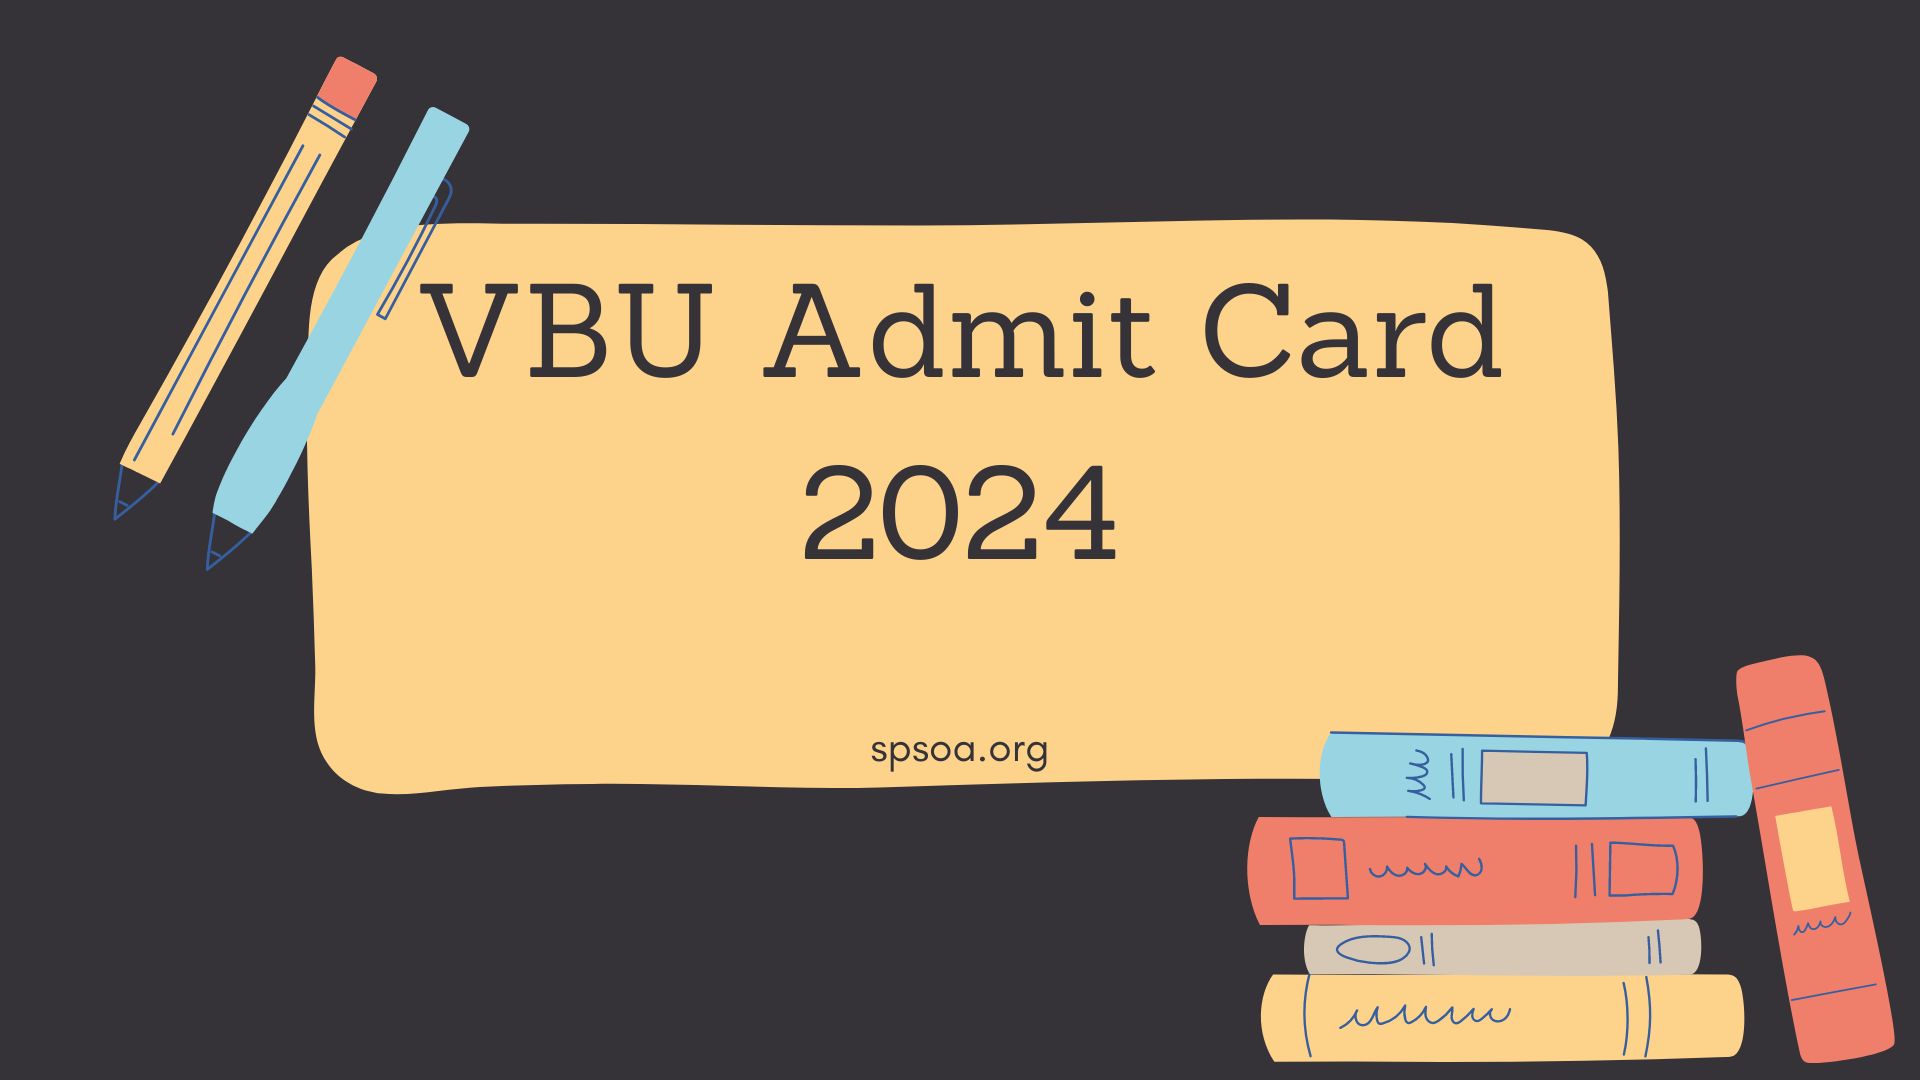 vbu admit card 2024